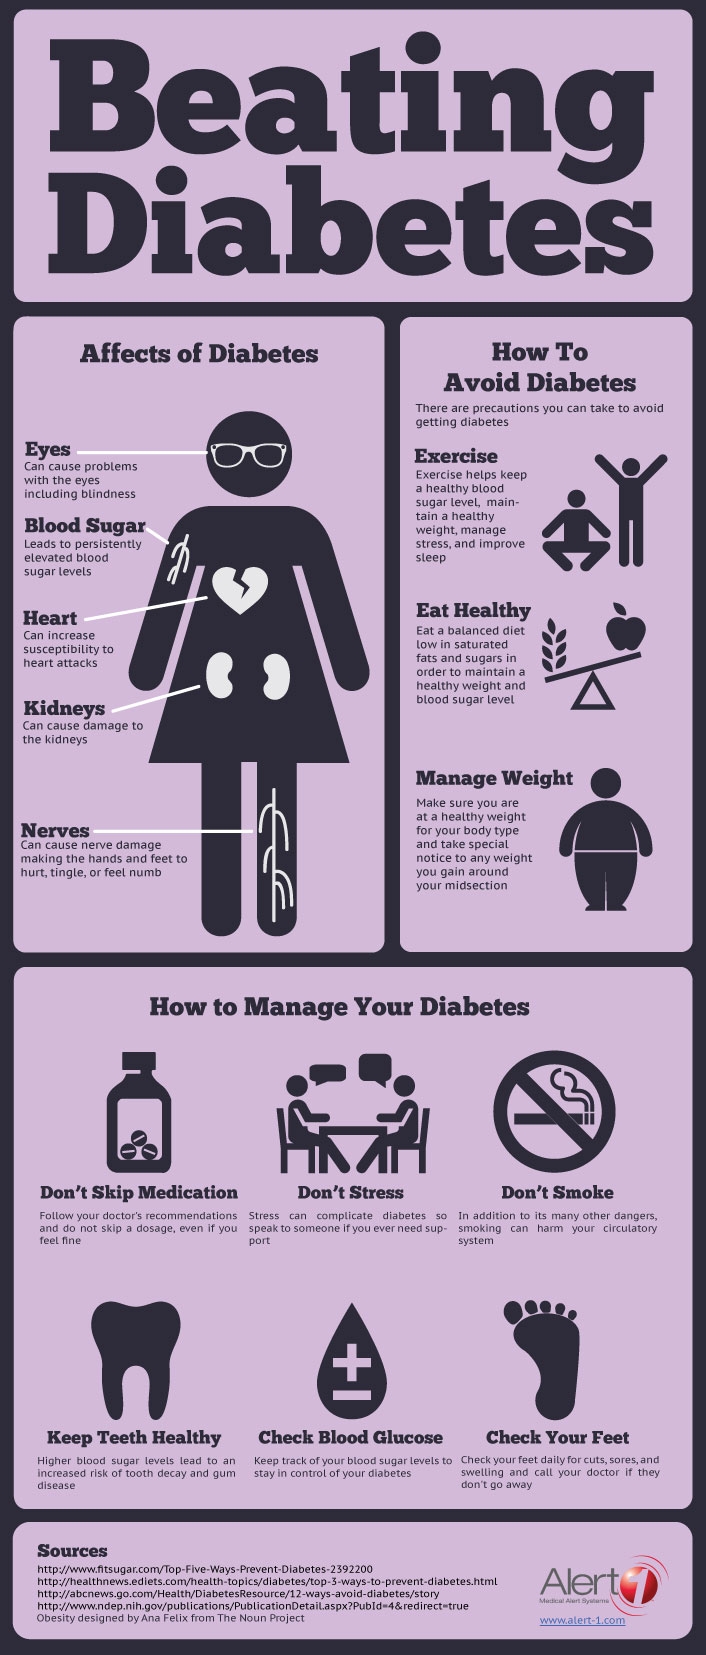 diabetes 2: misunderstanding of diabetes treatment!